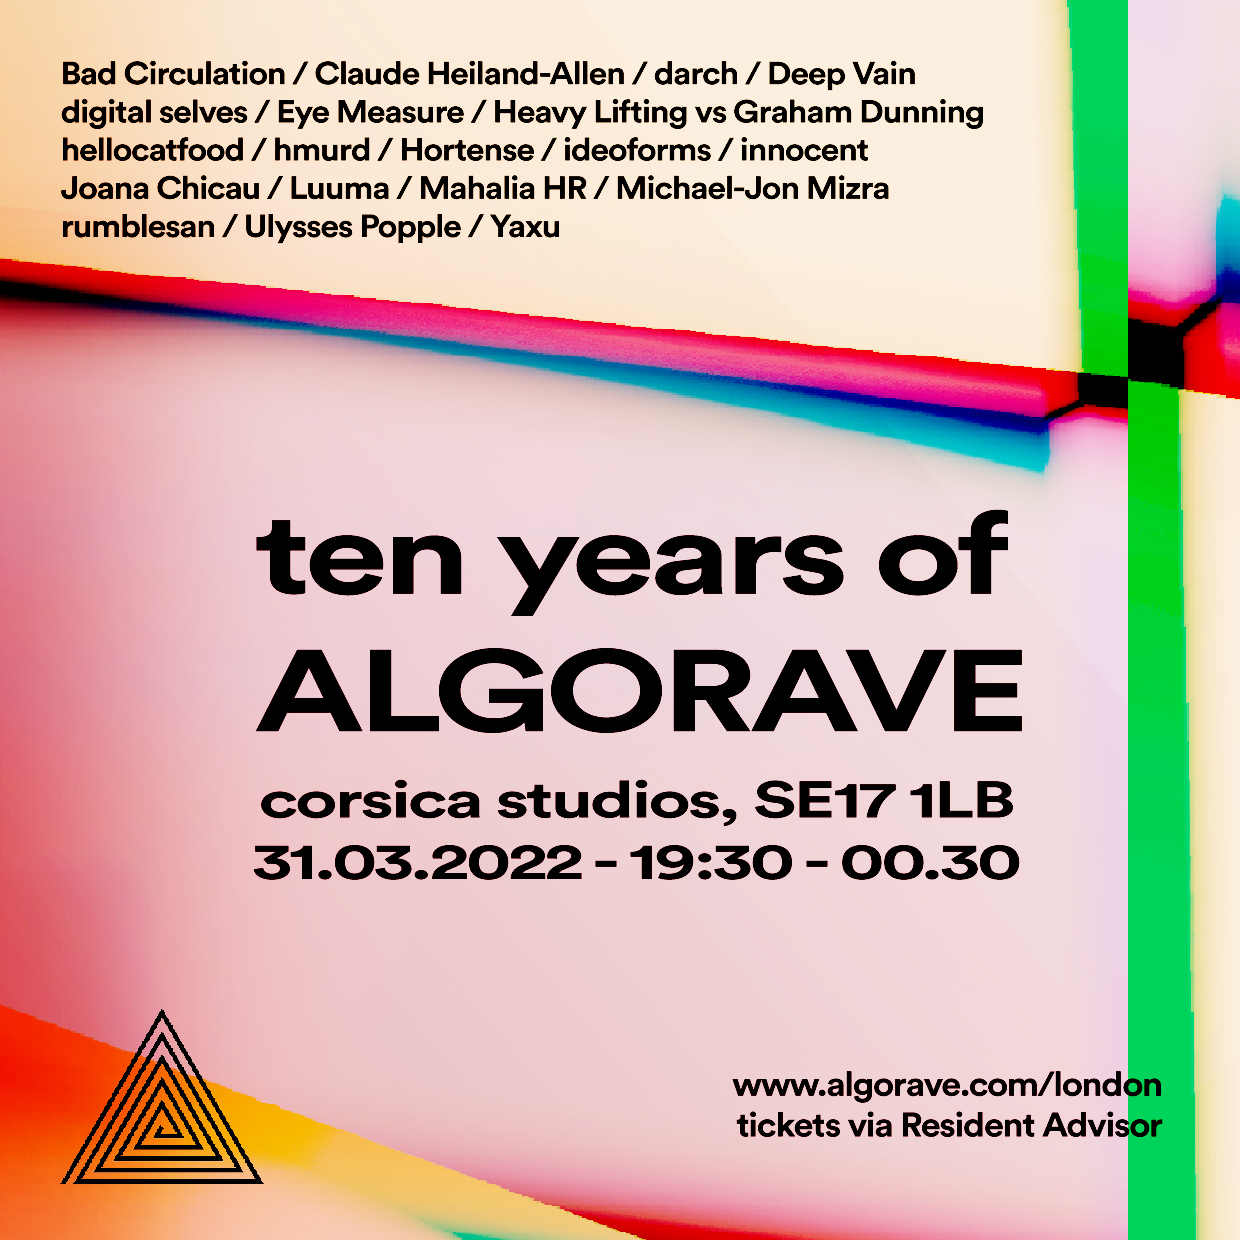 Ten years of Algorave poster